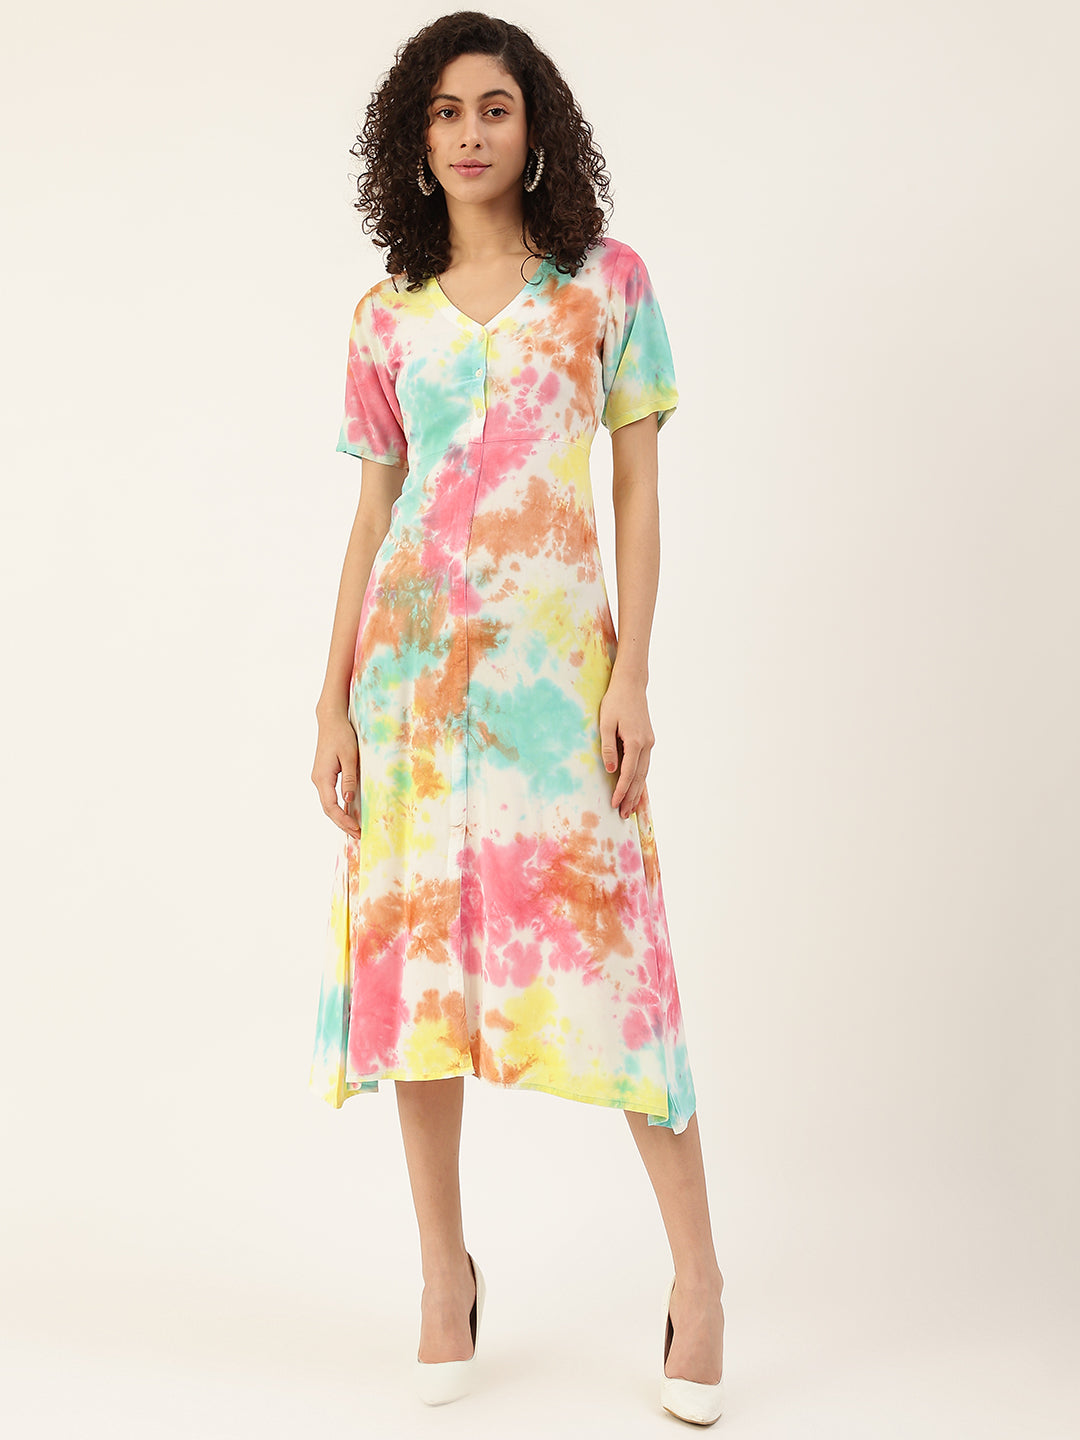 Women's Colorful Placket Dress  - Maaesa